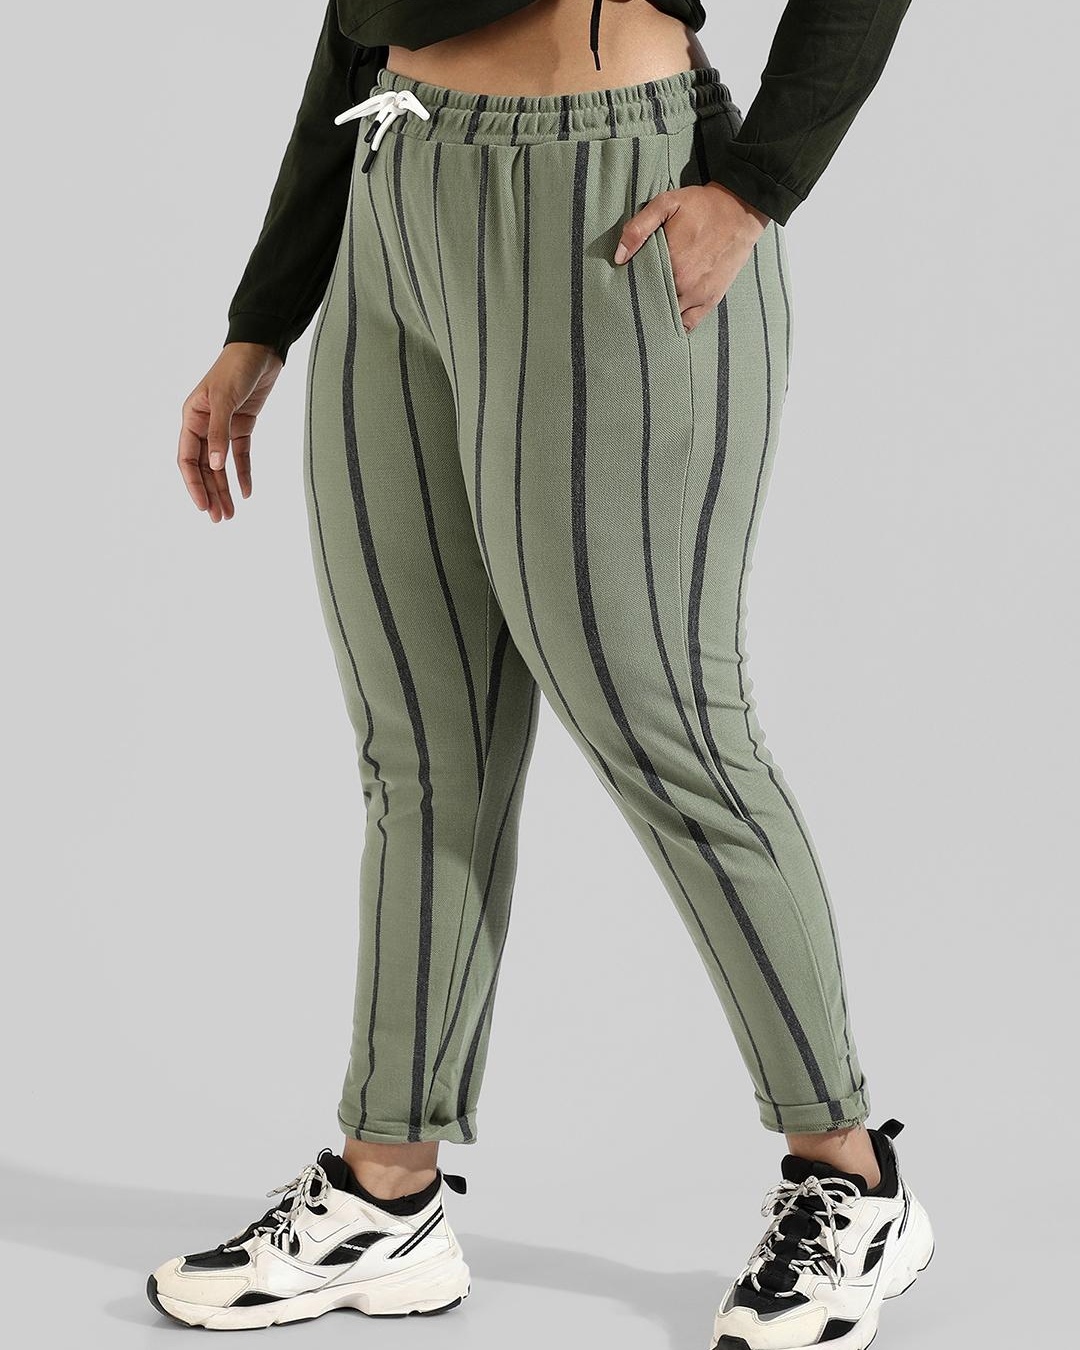 Nina Parker Trendy Plus Size Striped Crochet Top  Pants  Macys